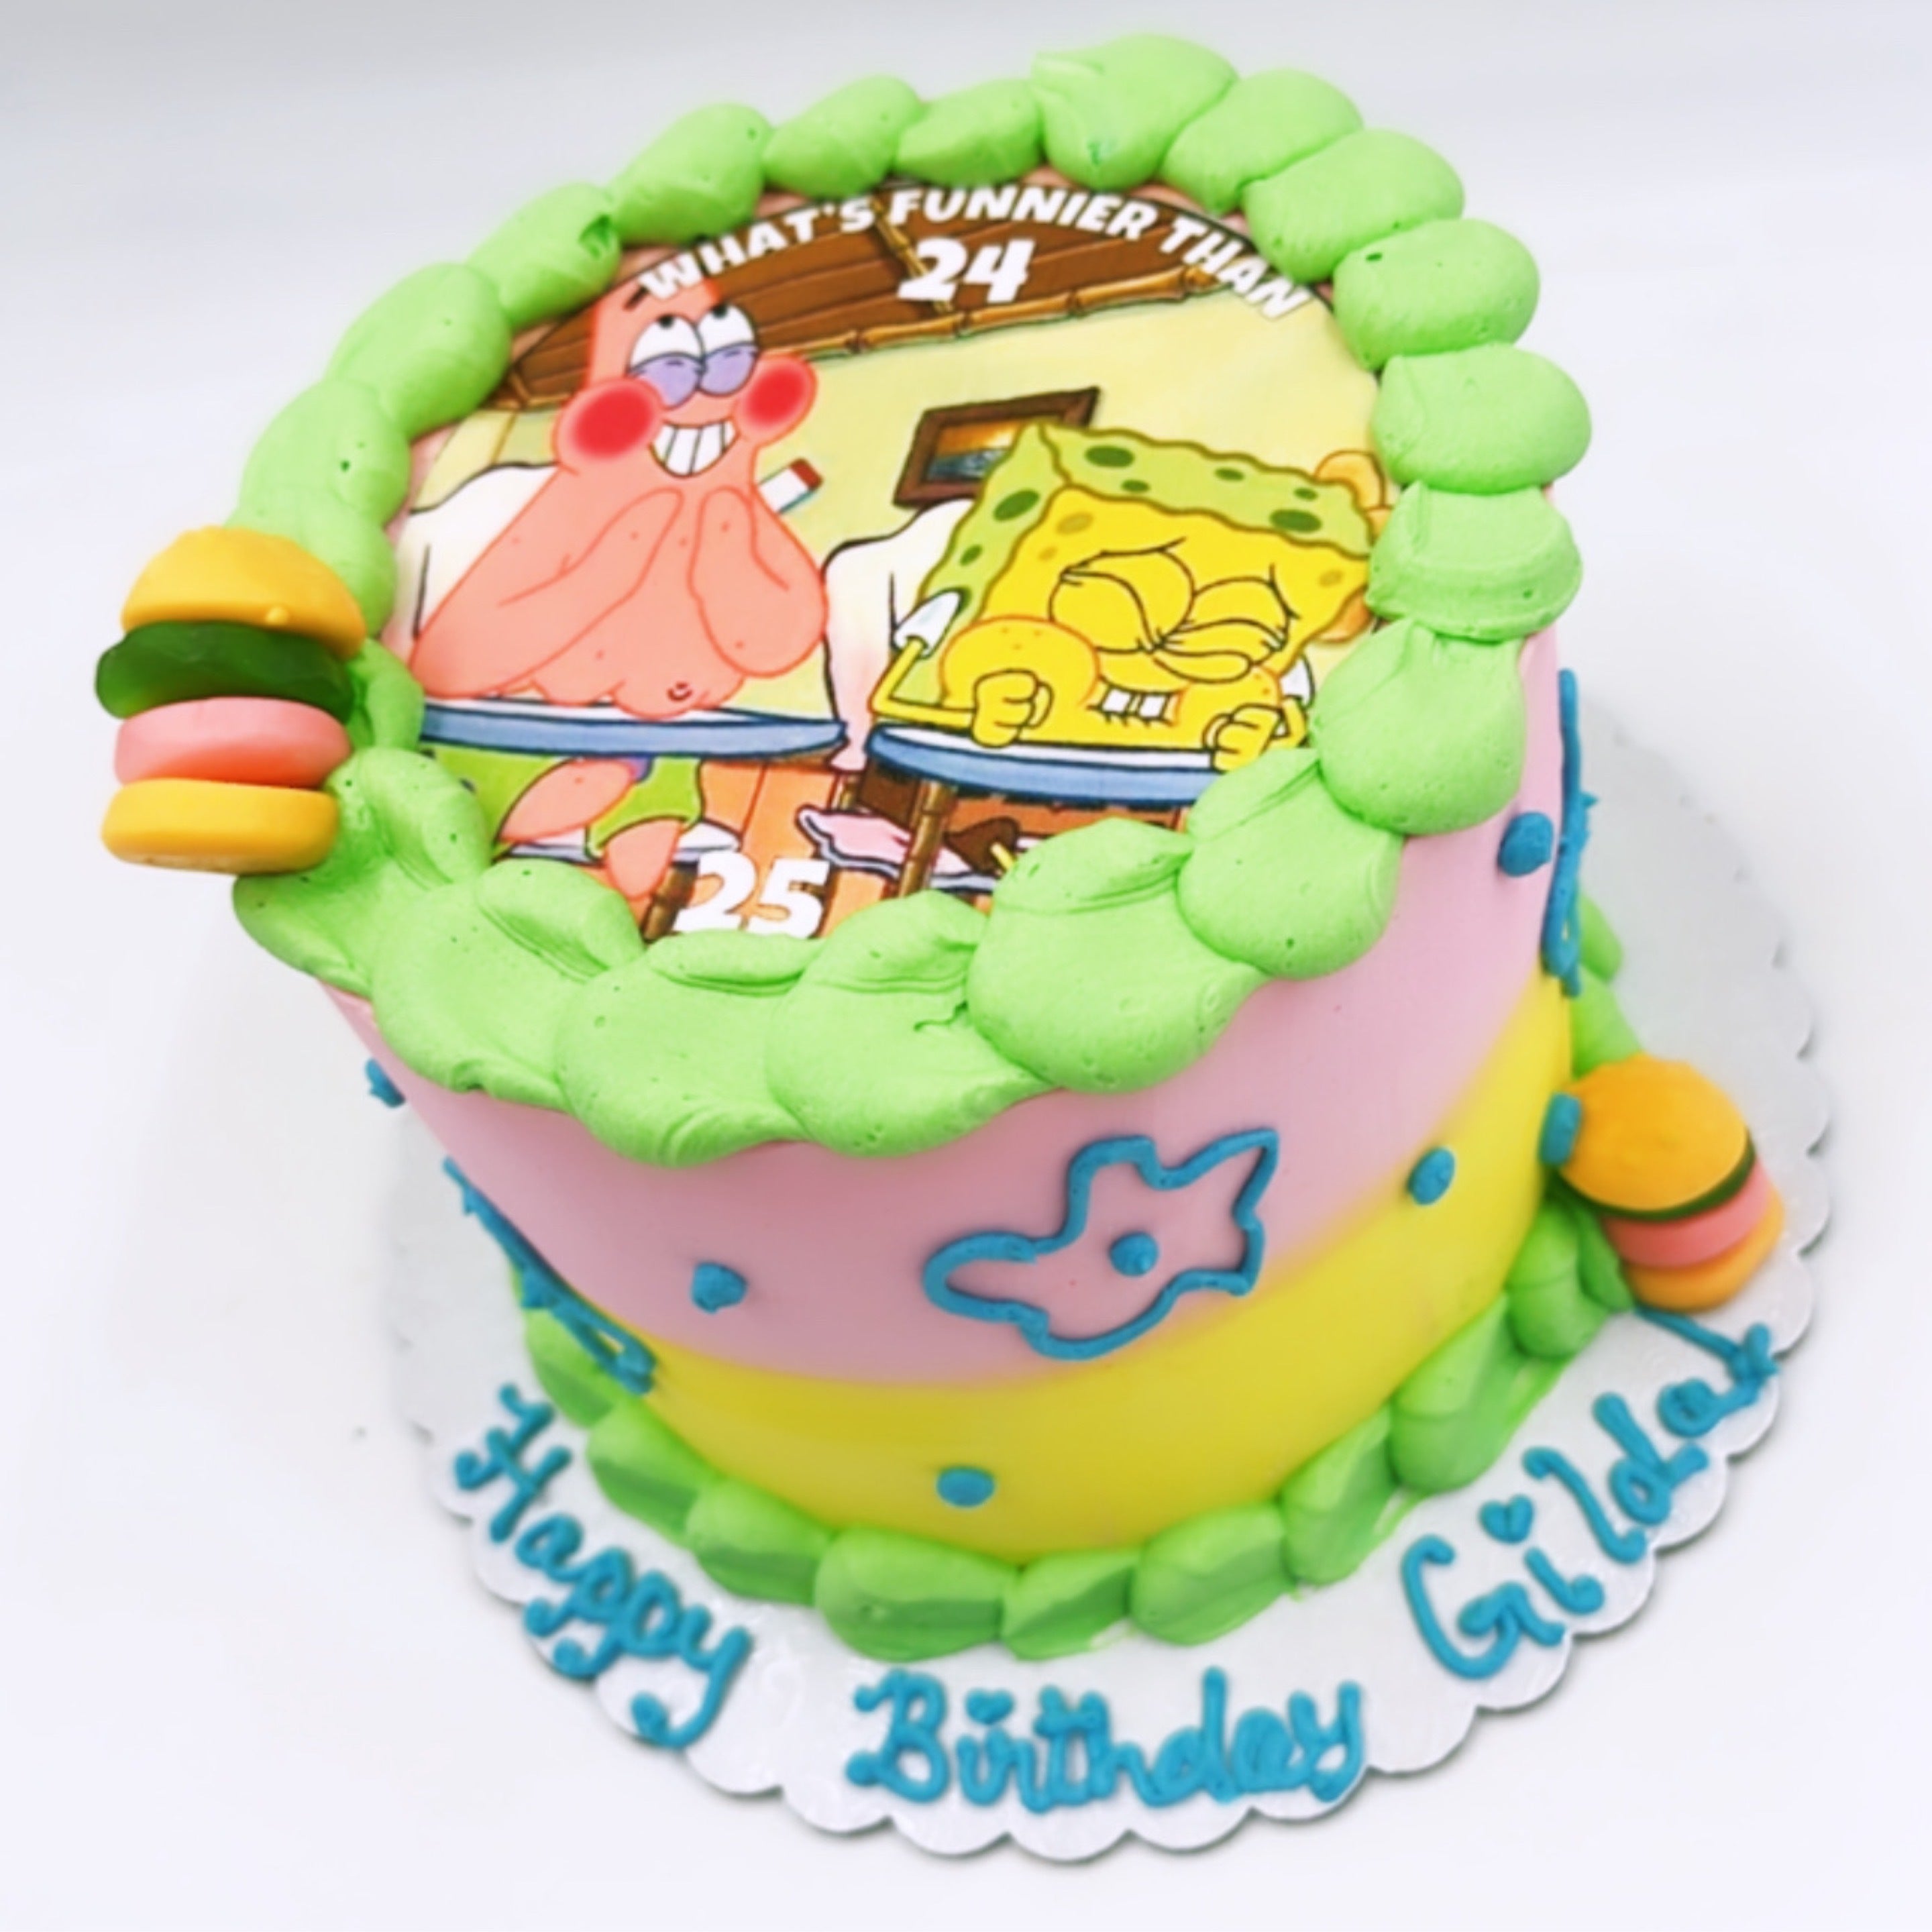 24th birthday cake - thank you... - Hala Cakes & Bake | Facebook